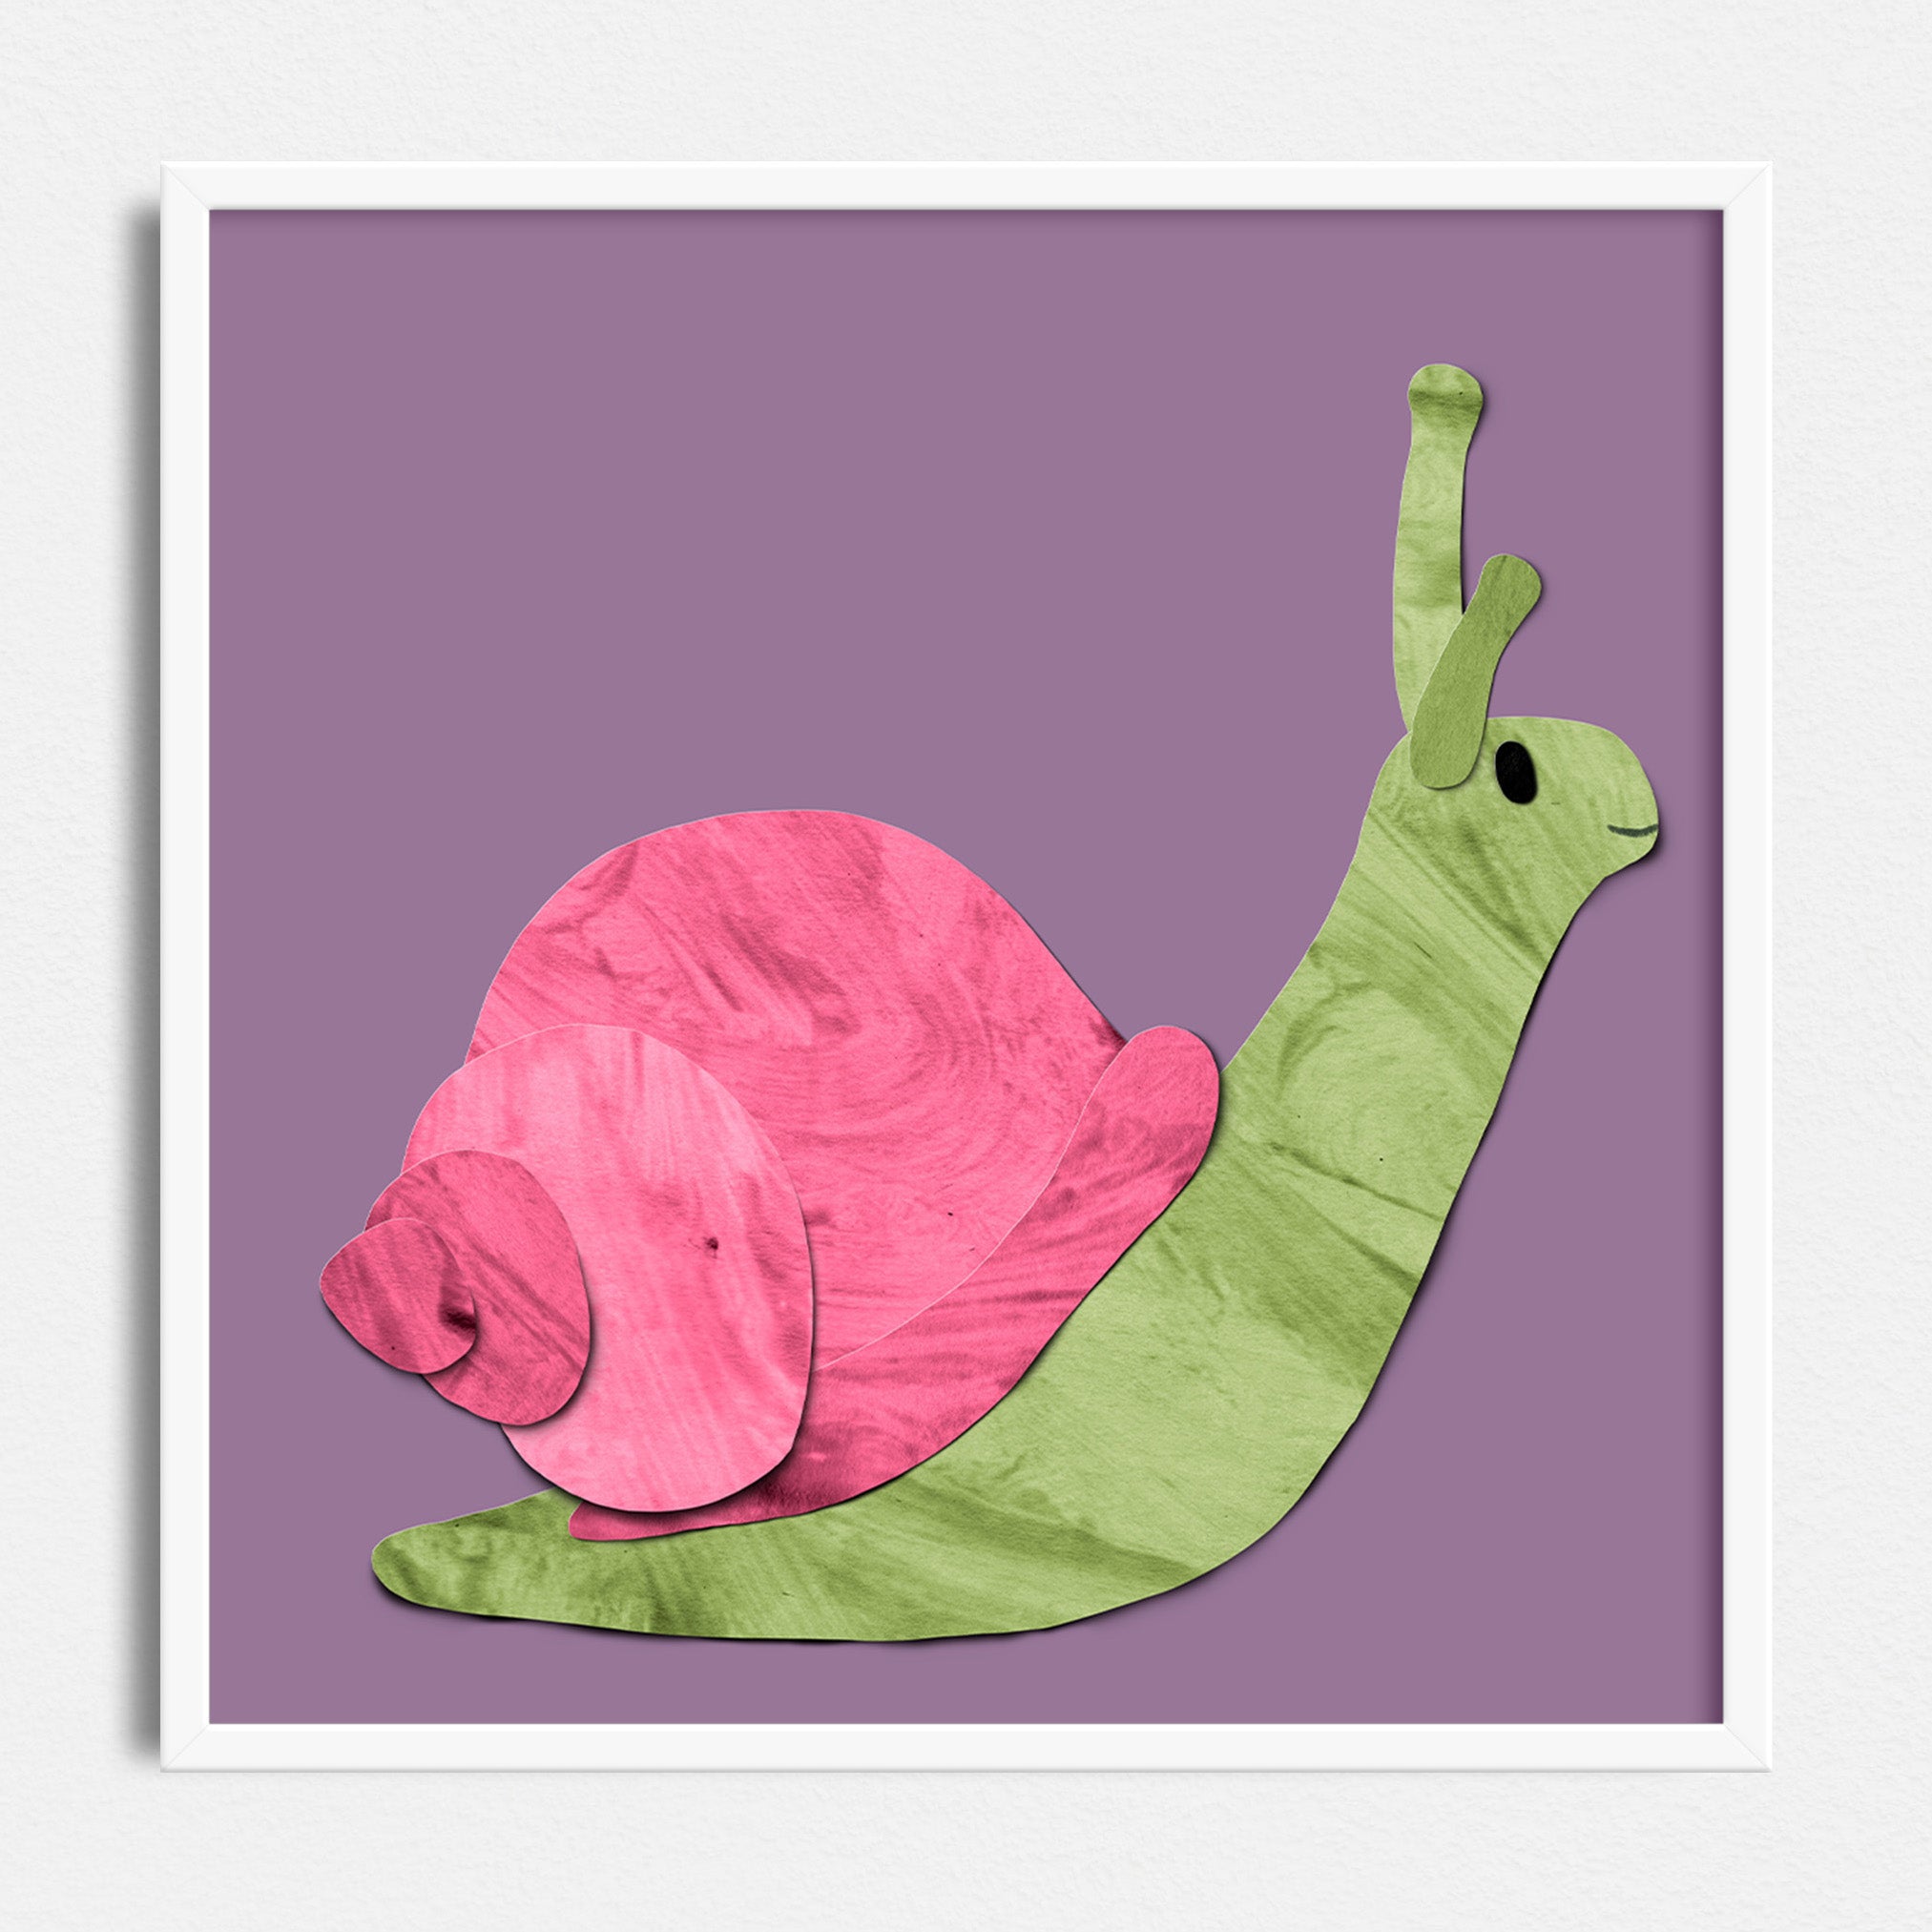 Snail Art Print - Collage Style